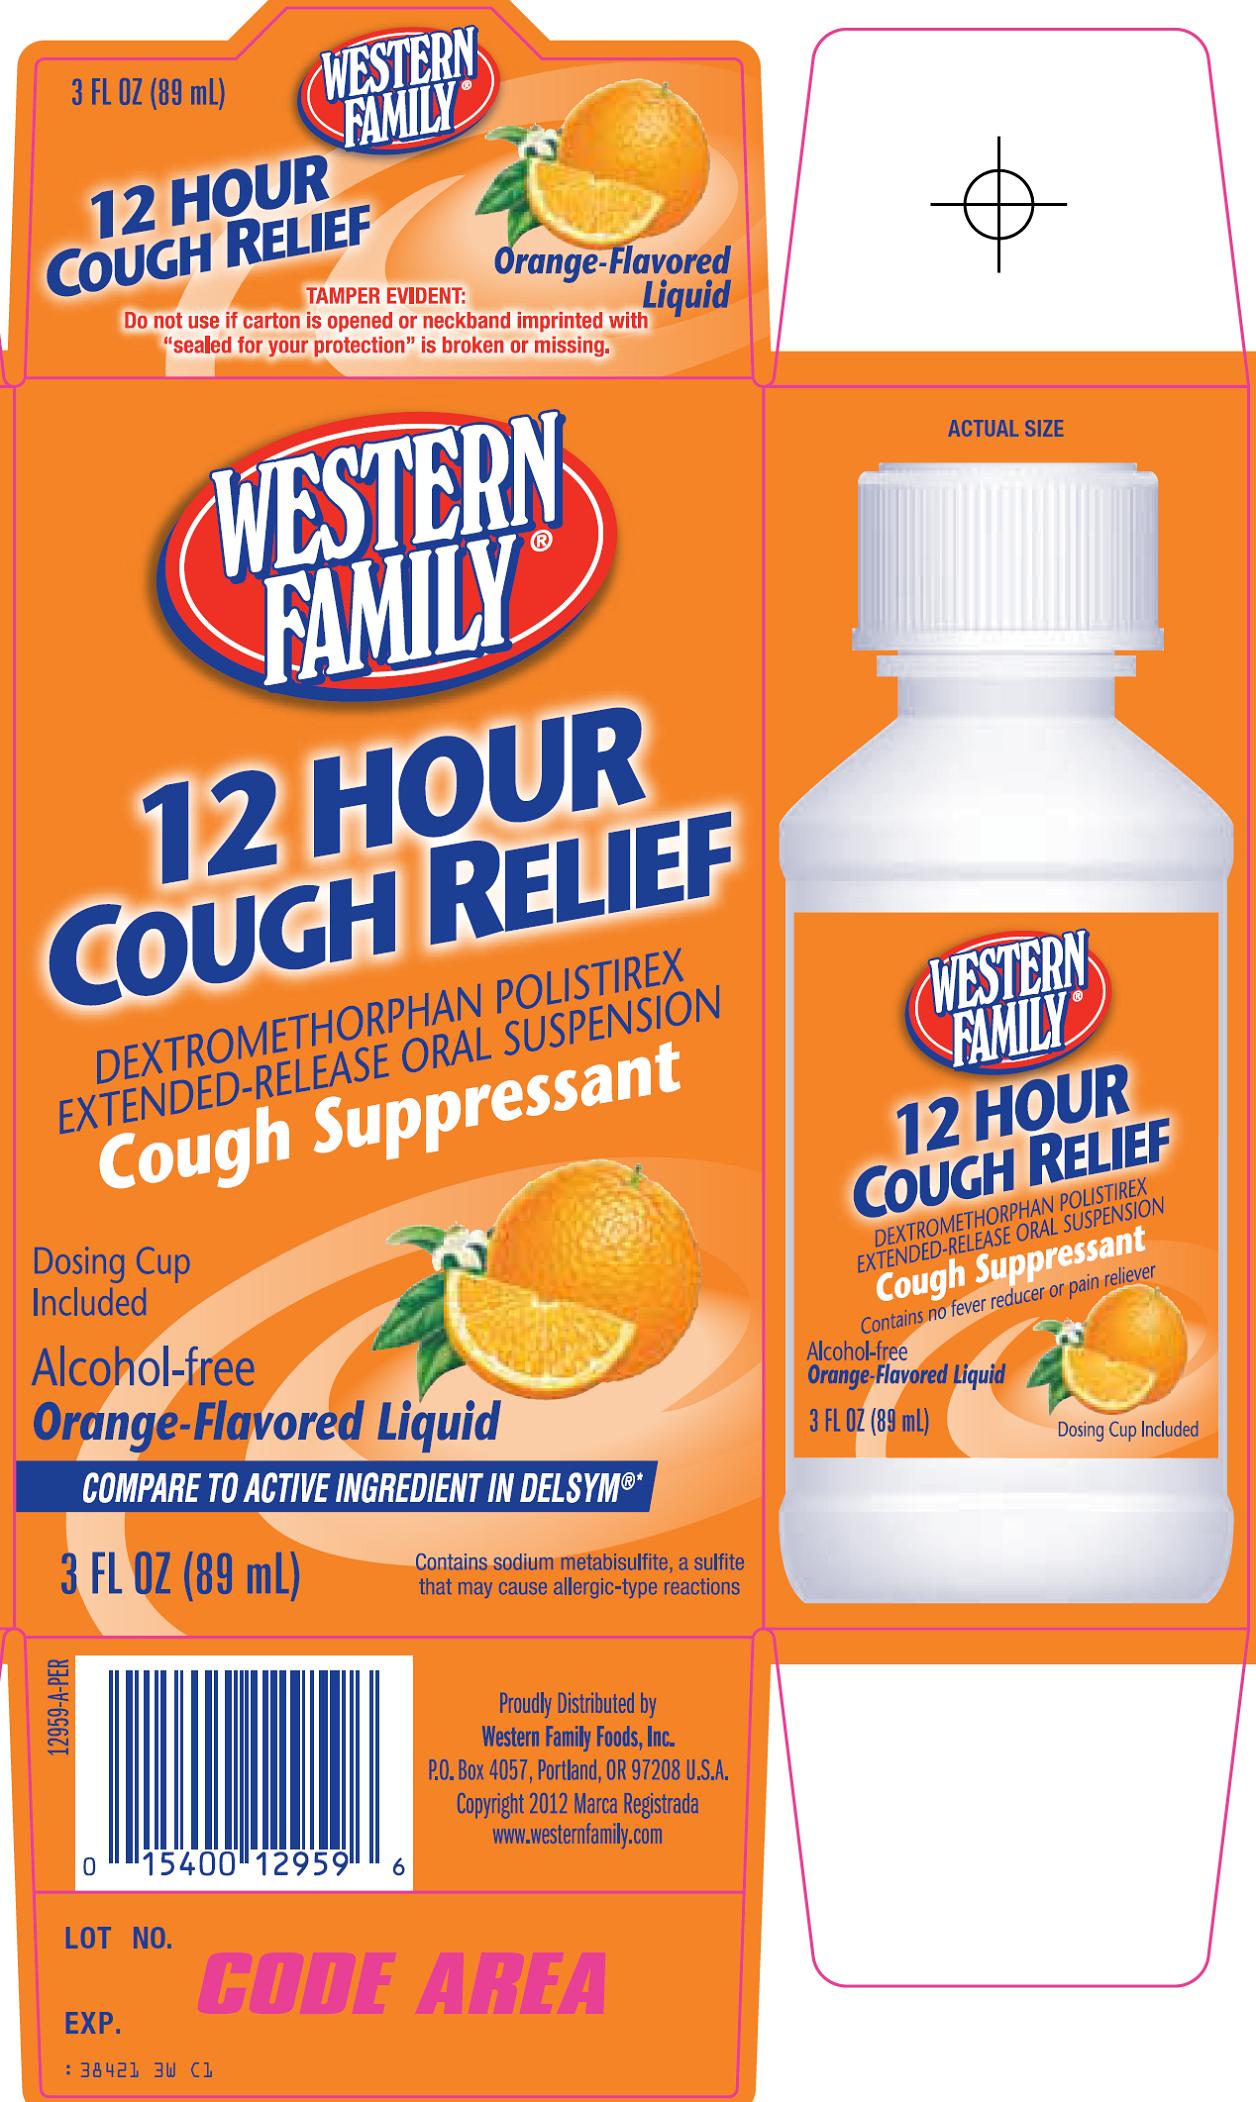 12 Hour Cough Relief Carton Image 1